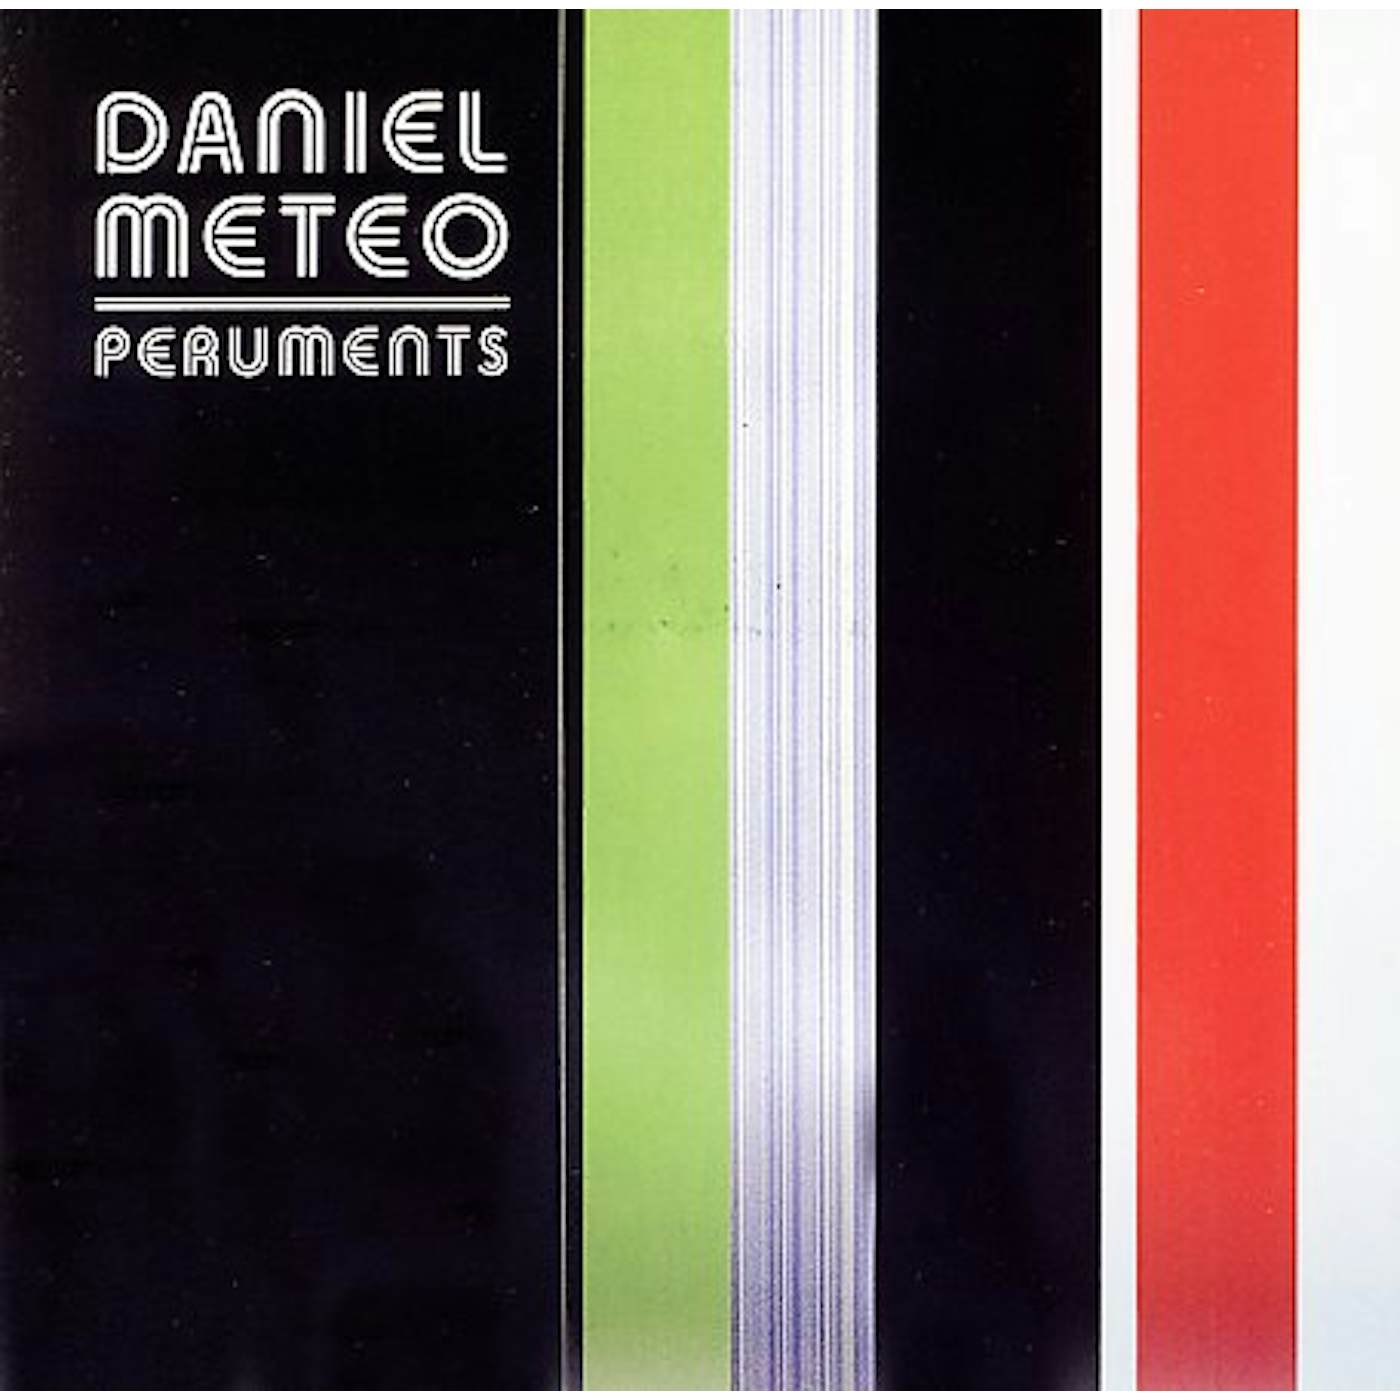 Daniel Meteo Peruments Vinyl Record